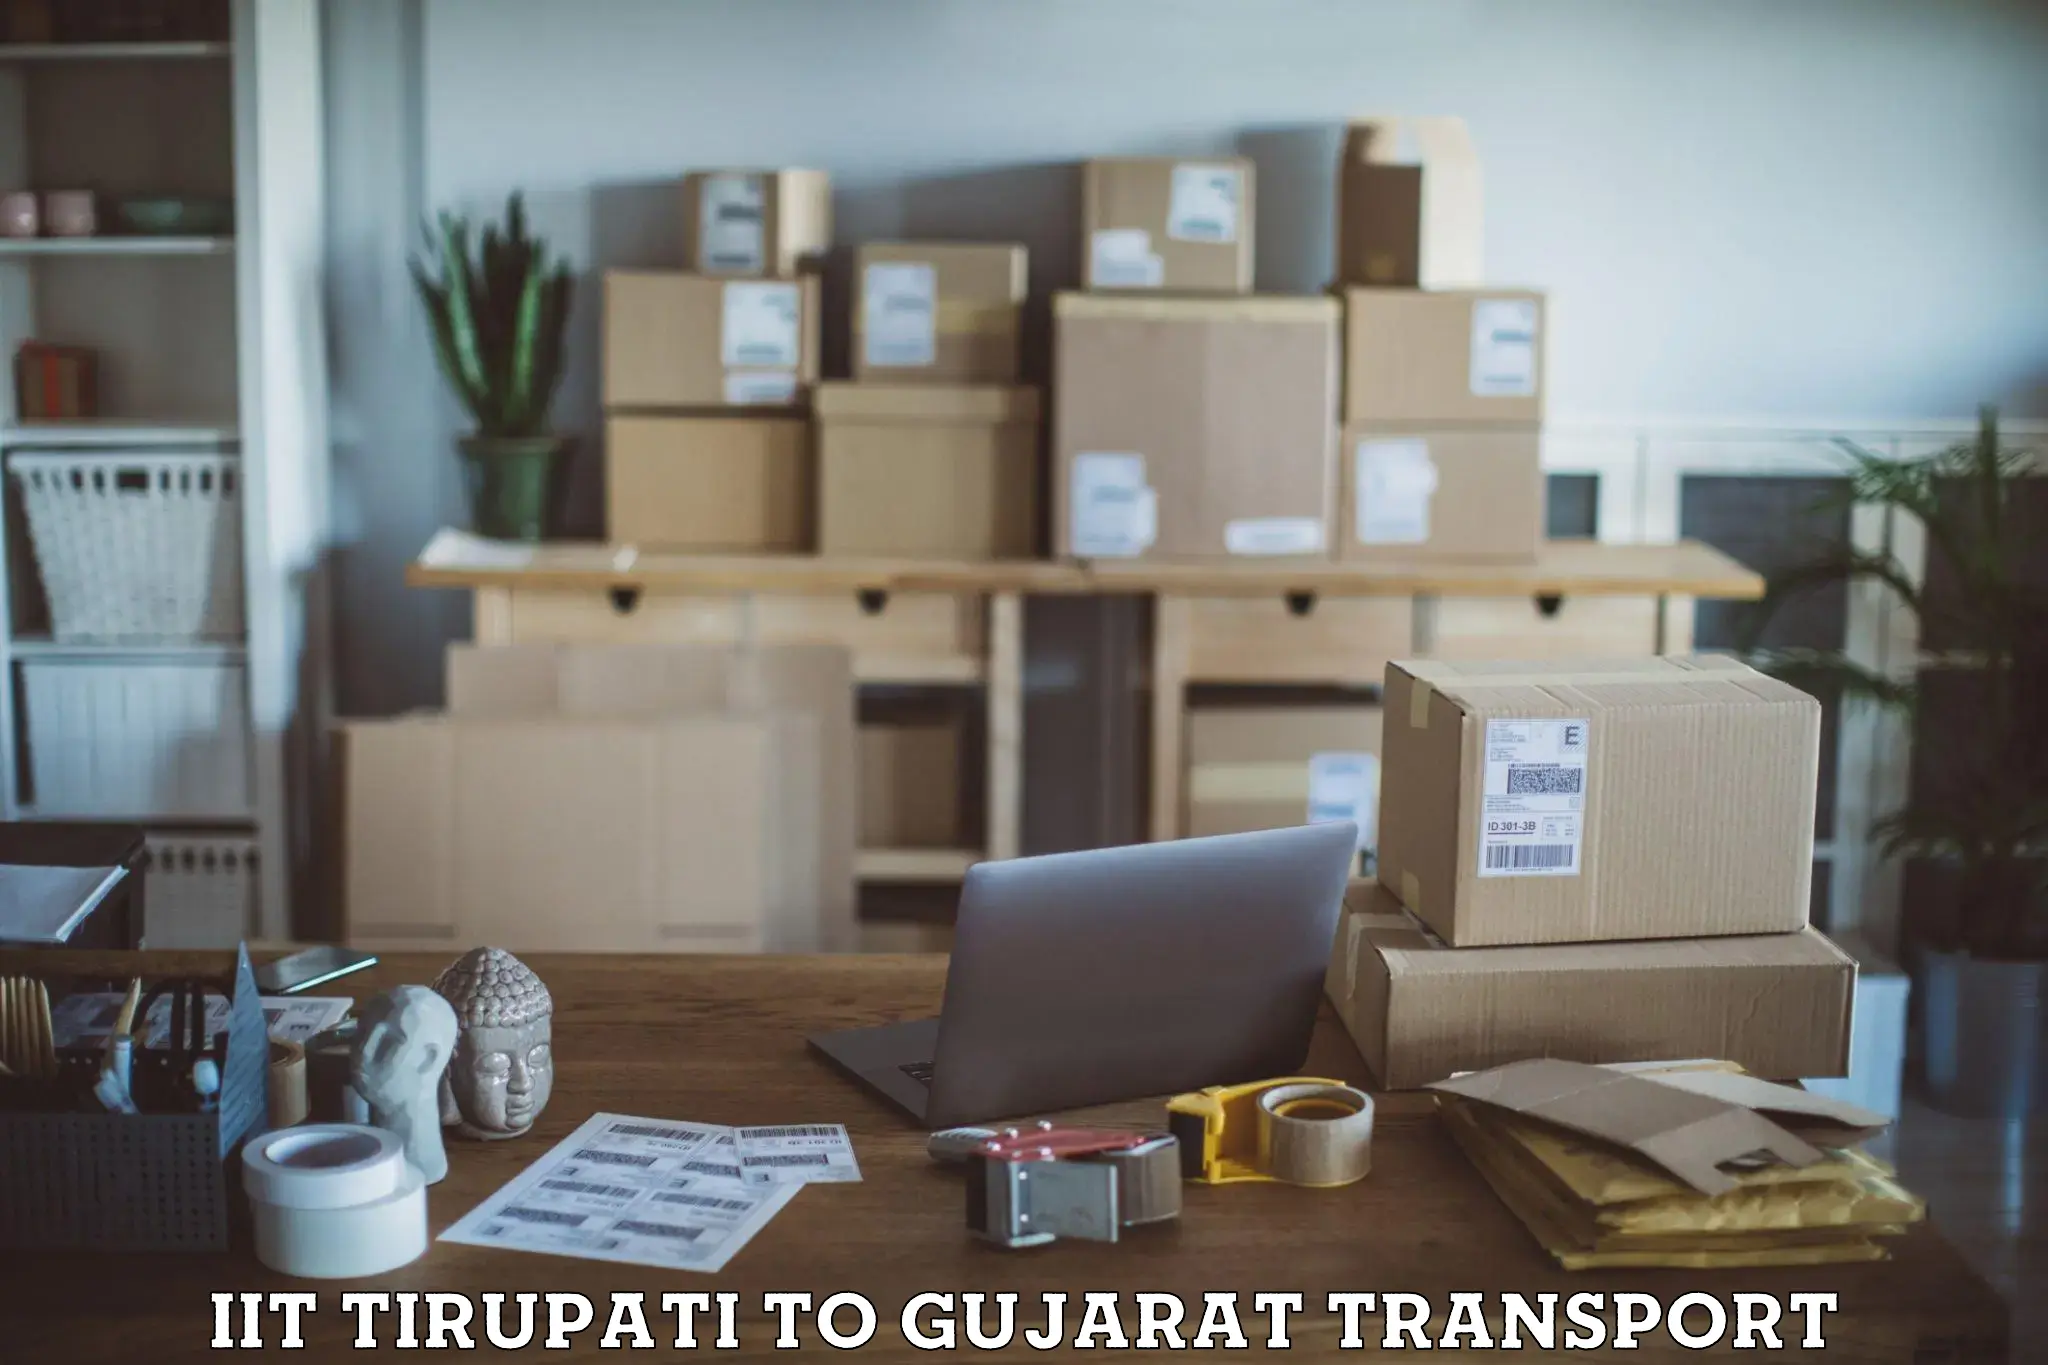 Daily parcel service transport in IIT Tirupati to Gujarat